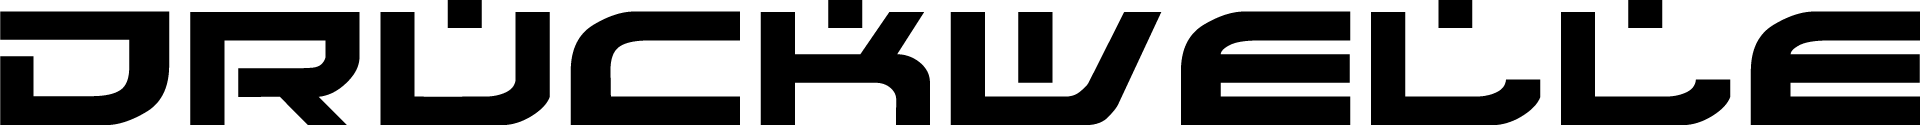 Druckwelle-Logo